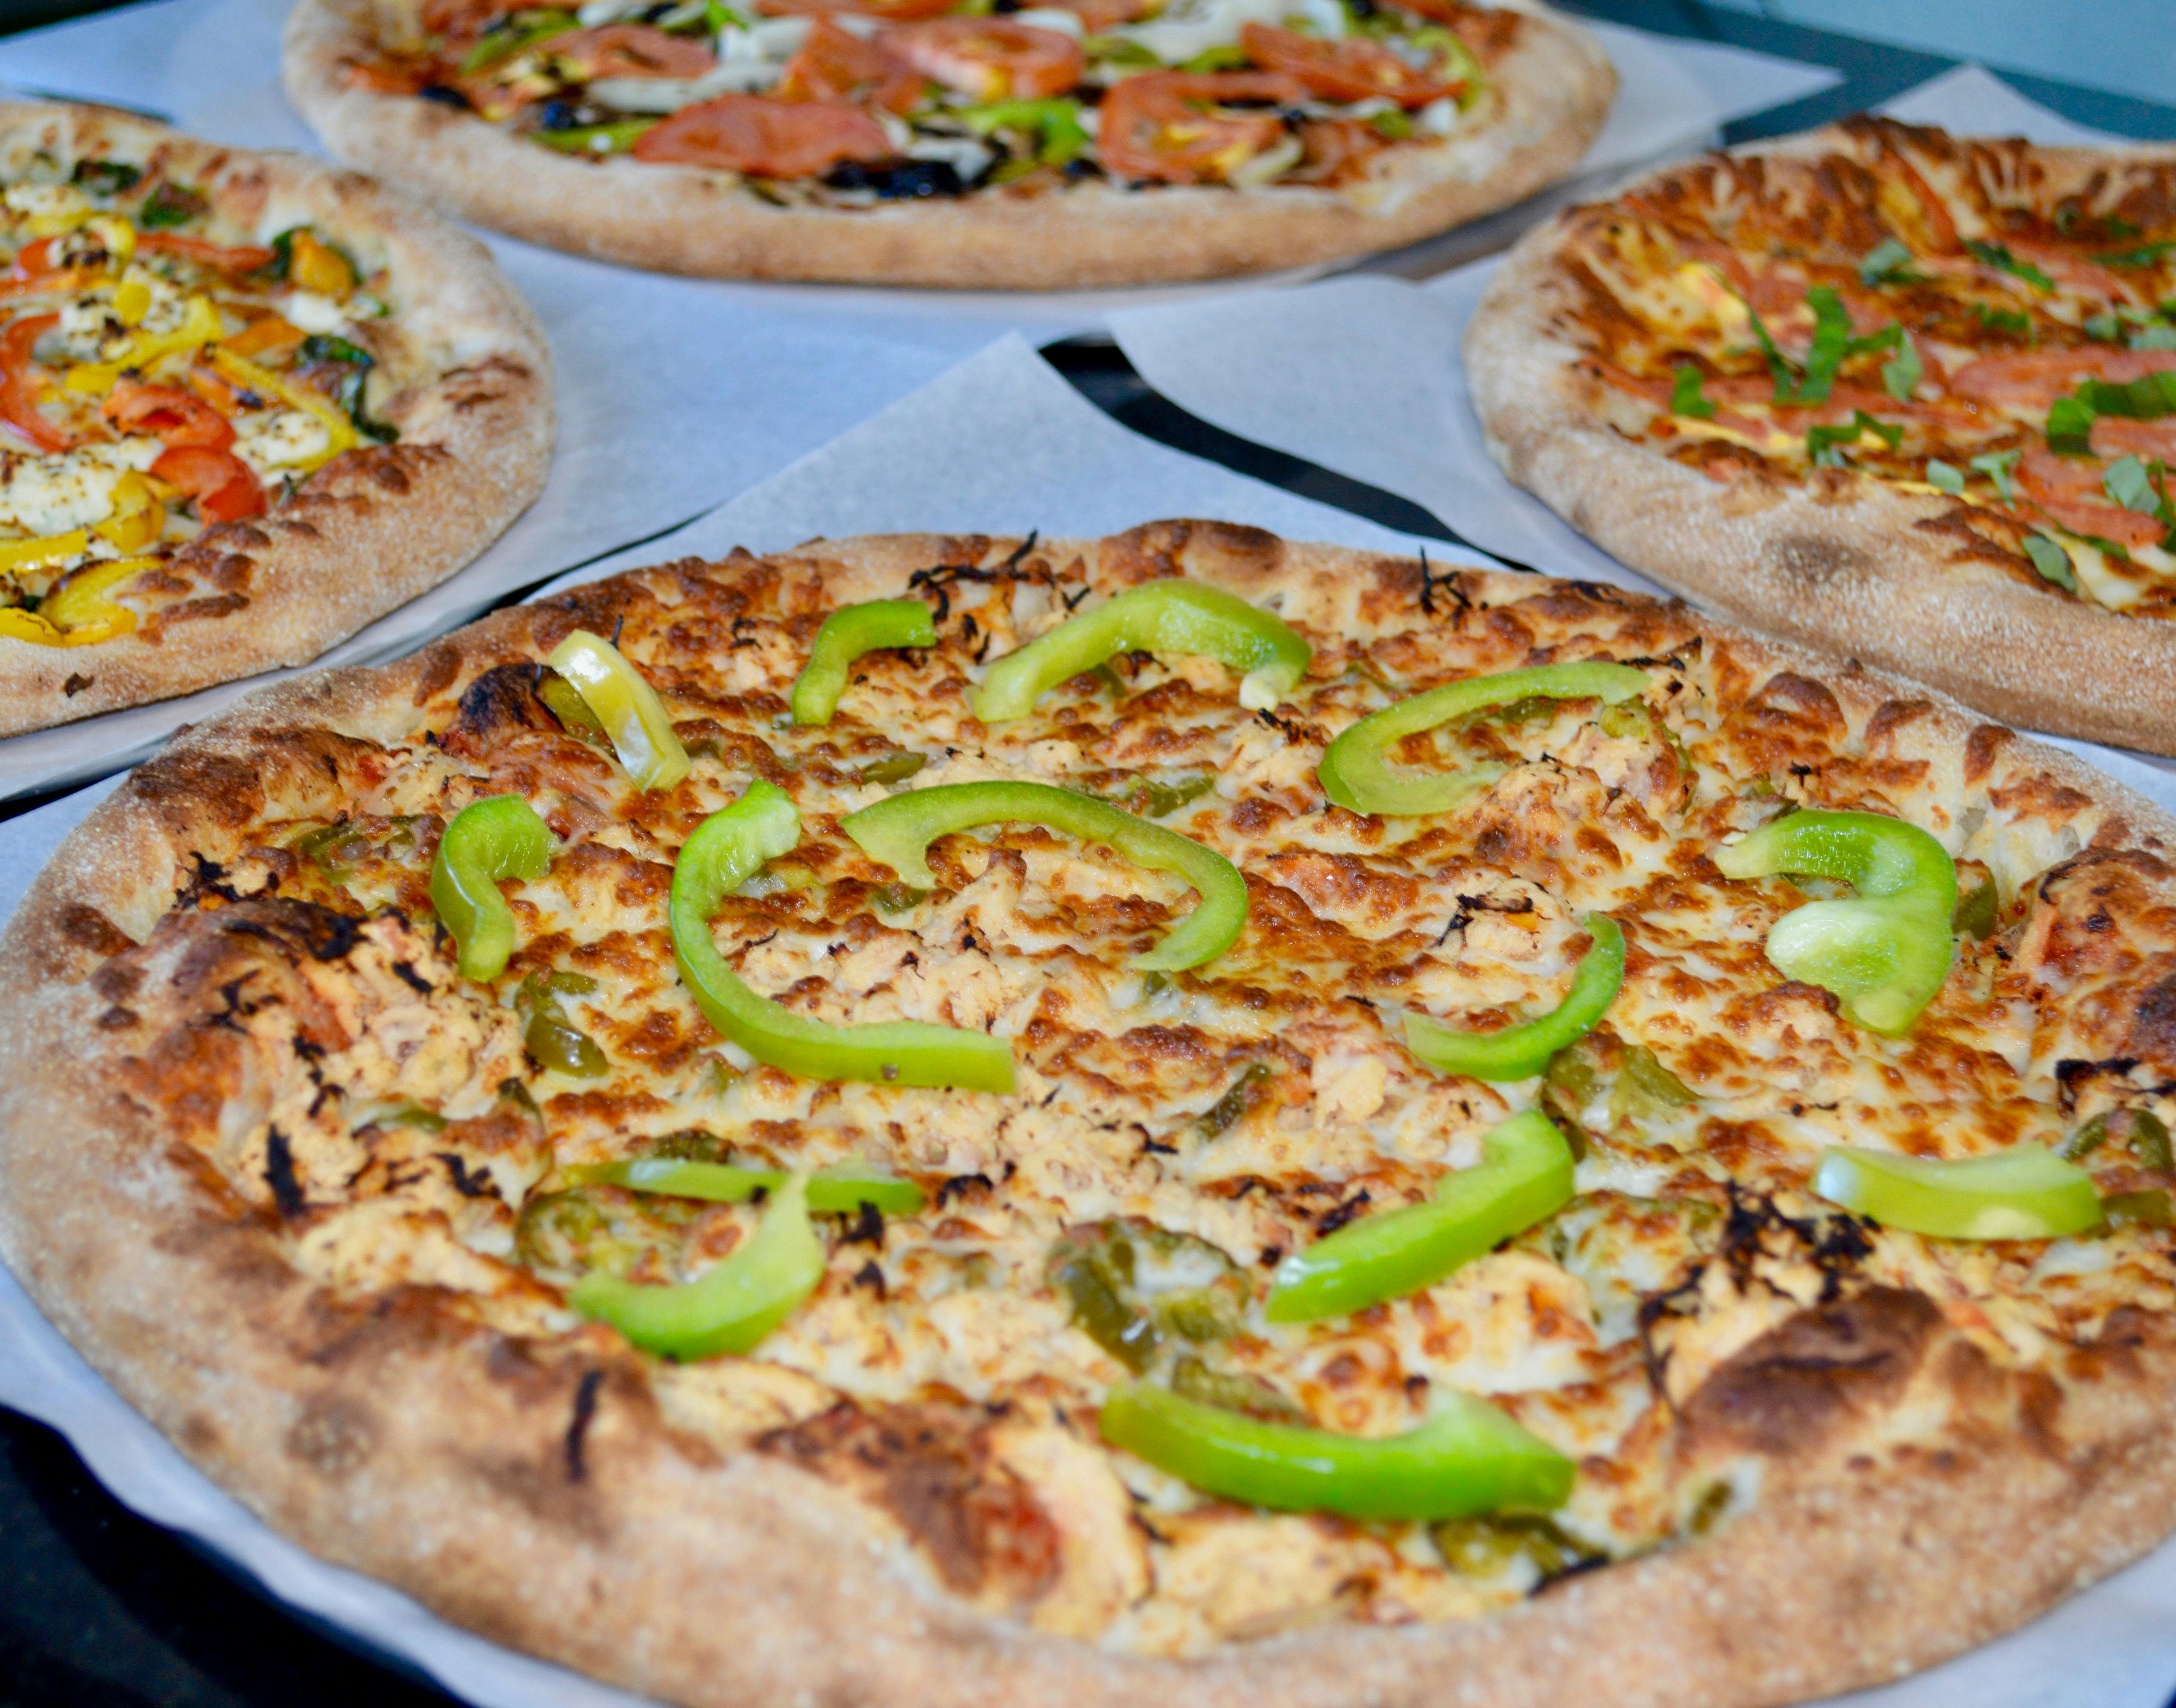 Rigo's Spicy Pizza from Aroma Pizza & Pasta in Lake Forest, CA